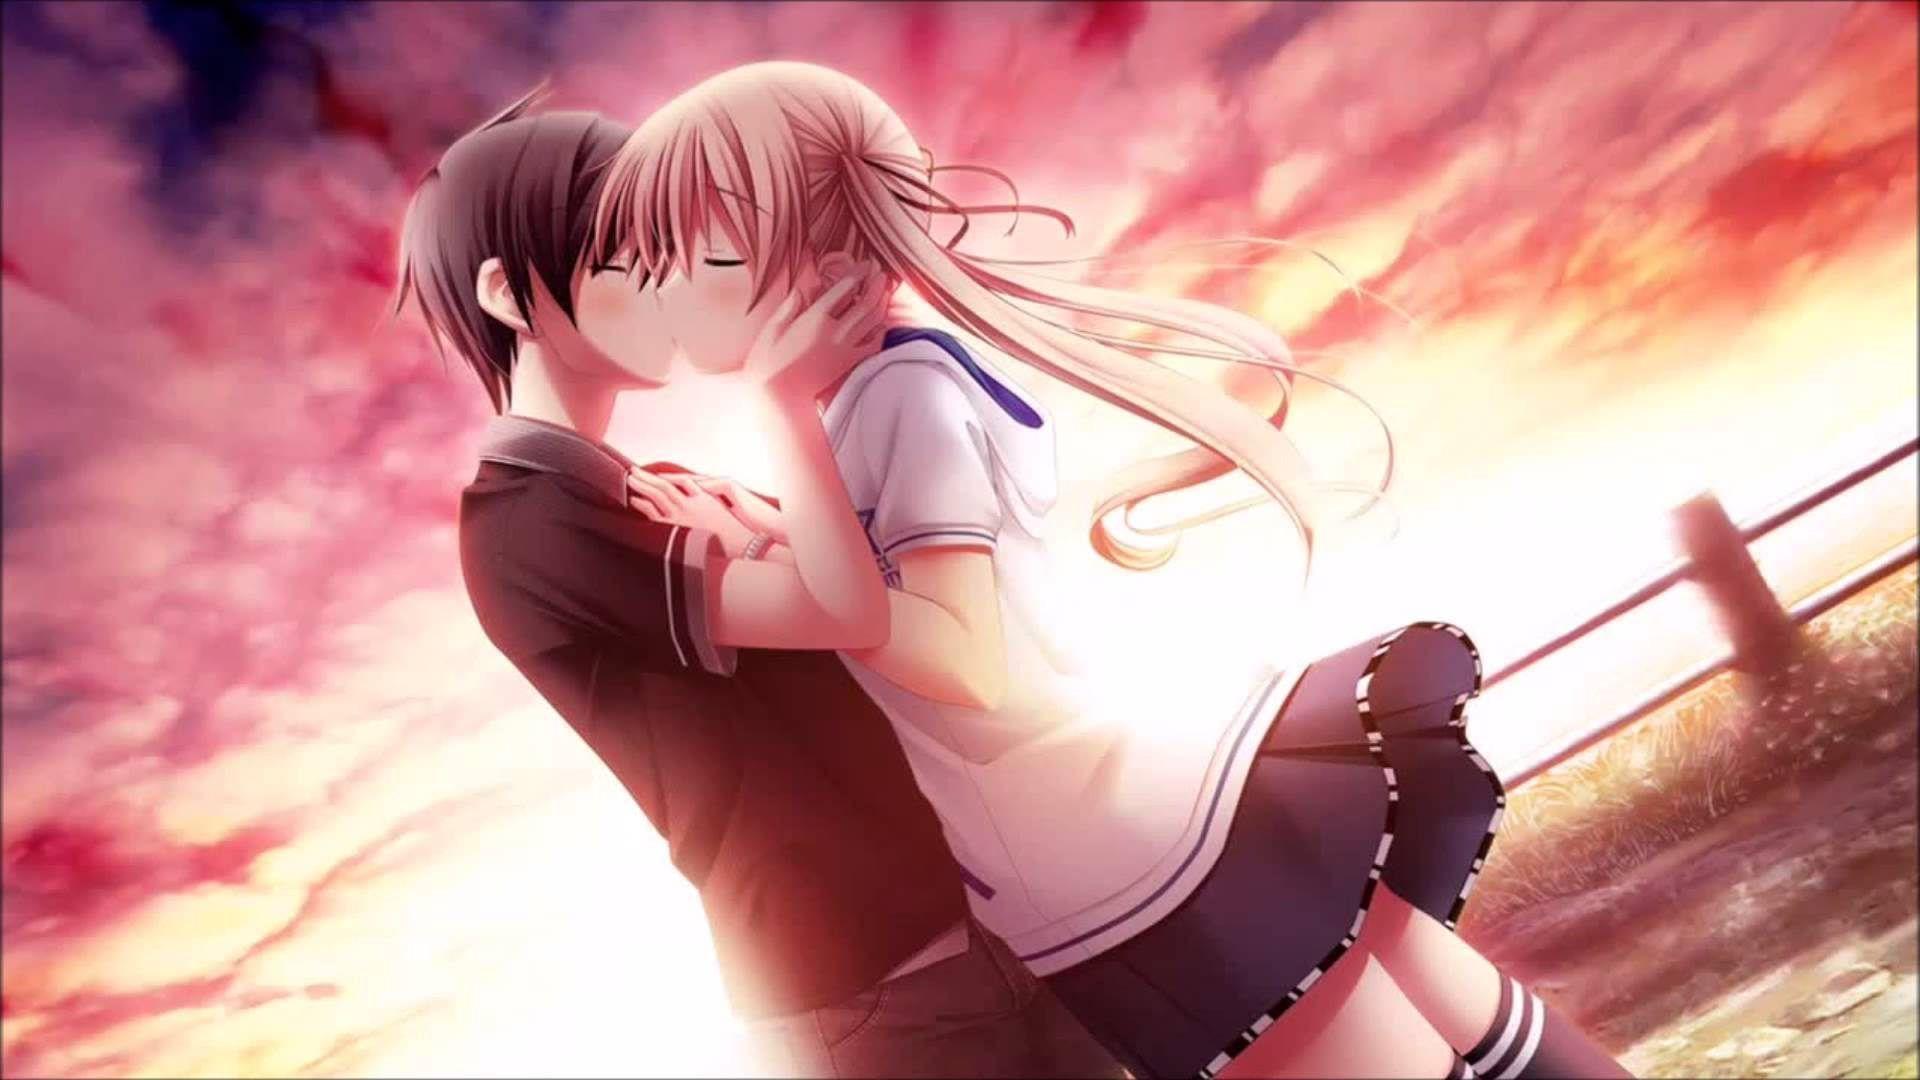 Love Kiss Of Cute Anime Couple HD Wallpaper A Huge